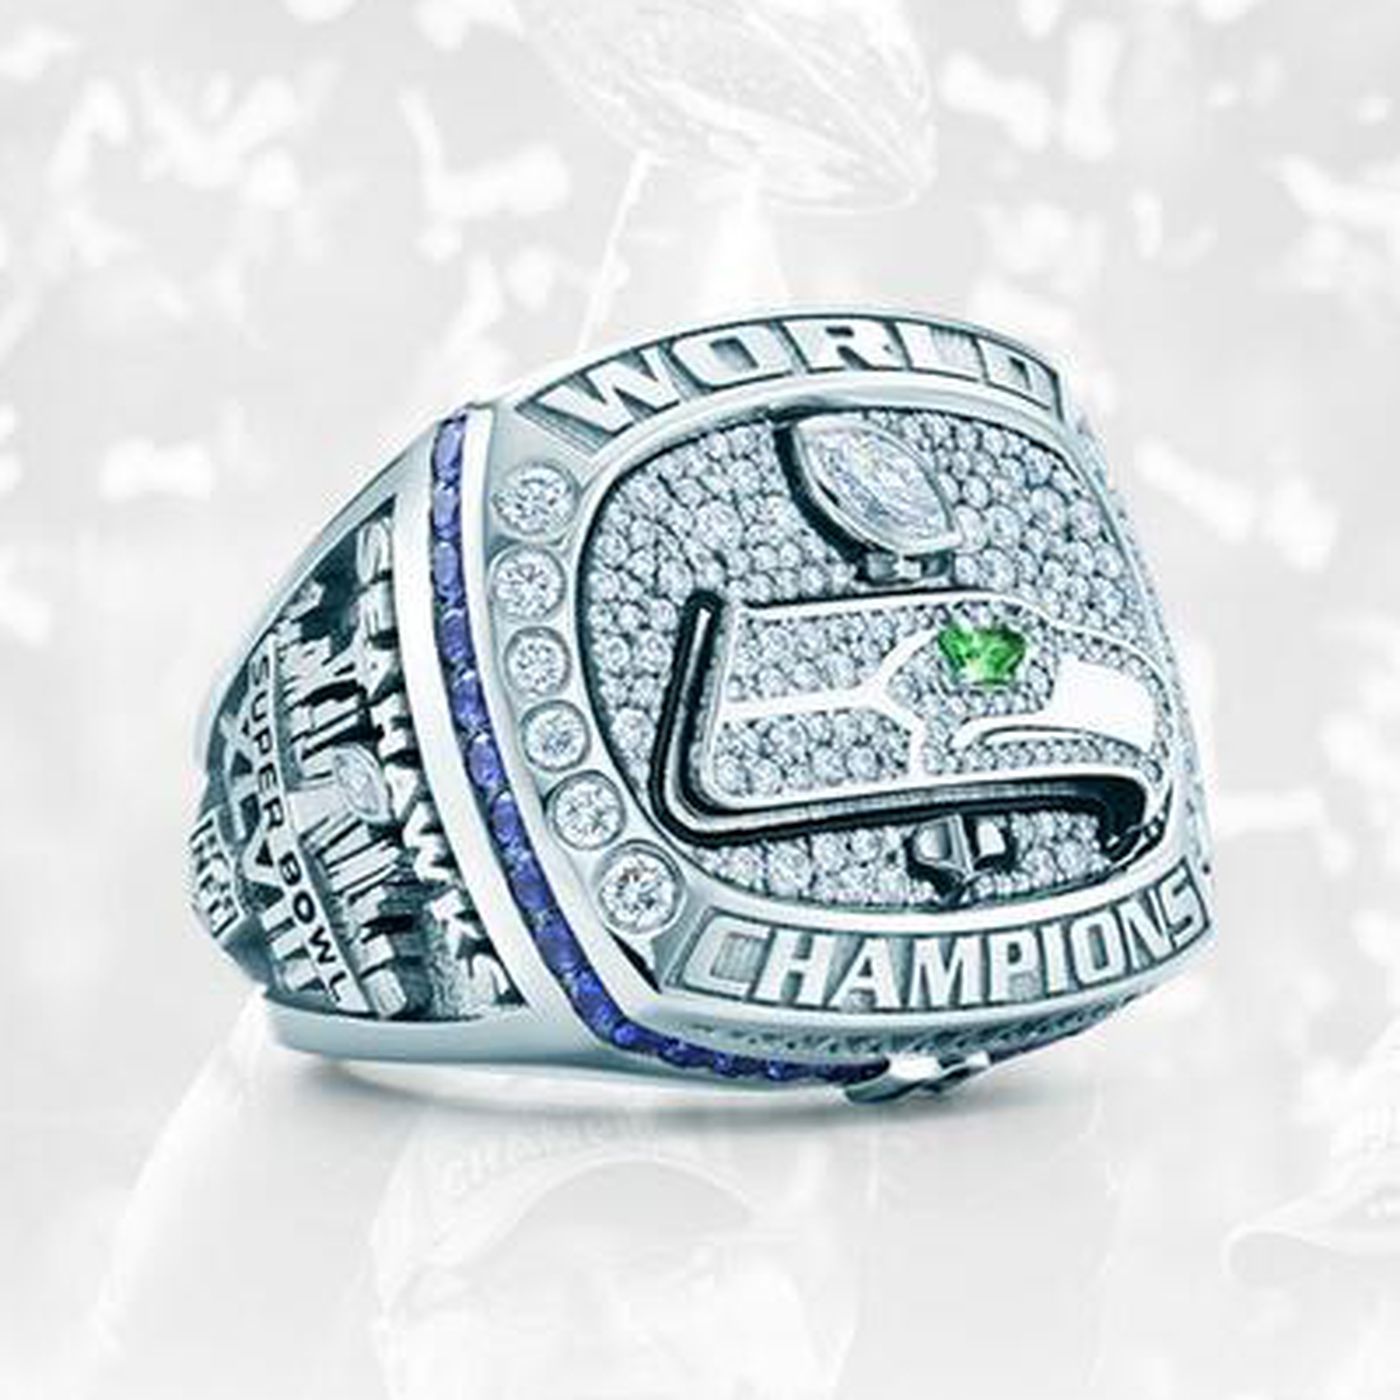 Seattle Seahawks Super Bowl ring revealed 